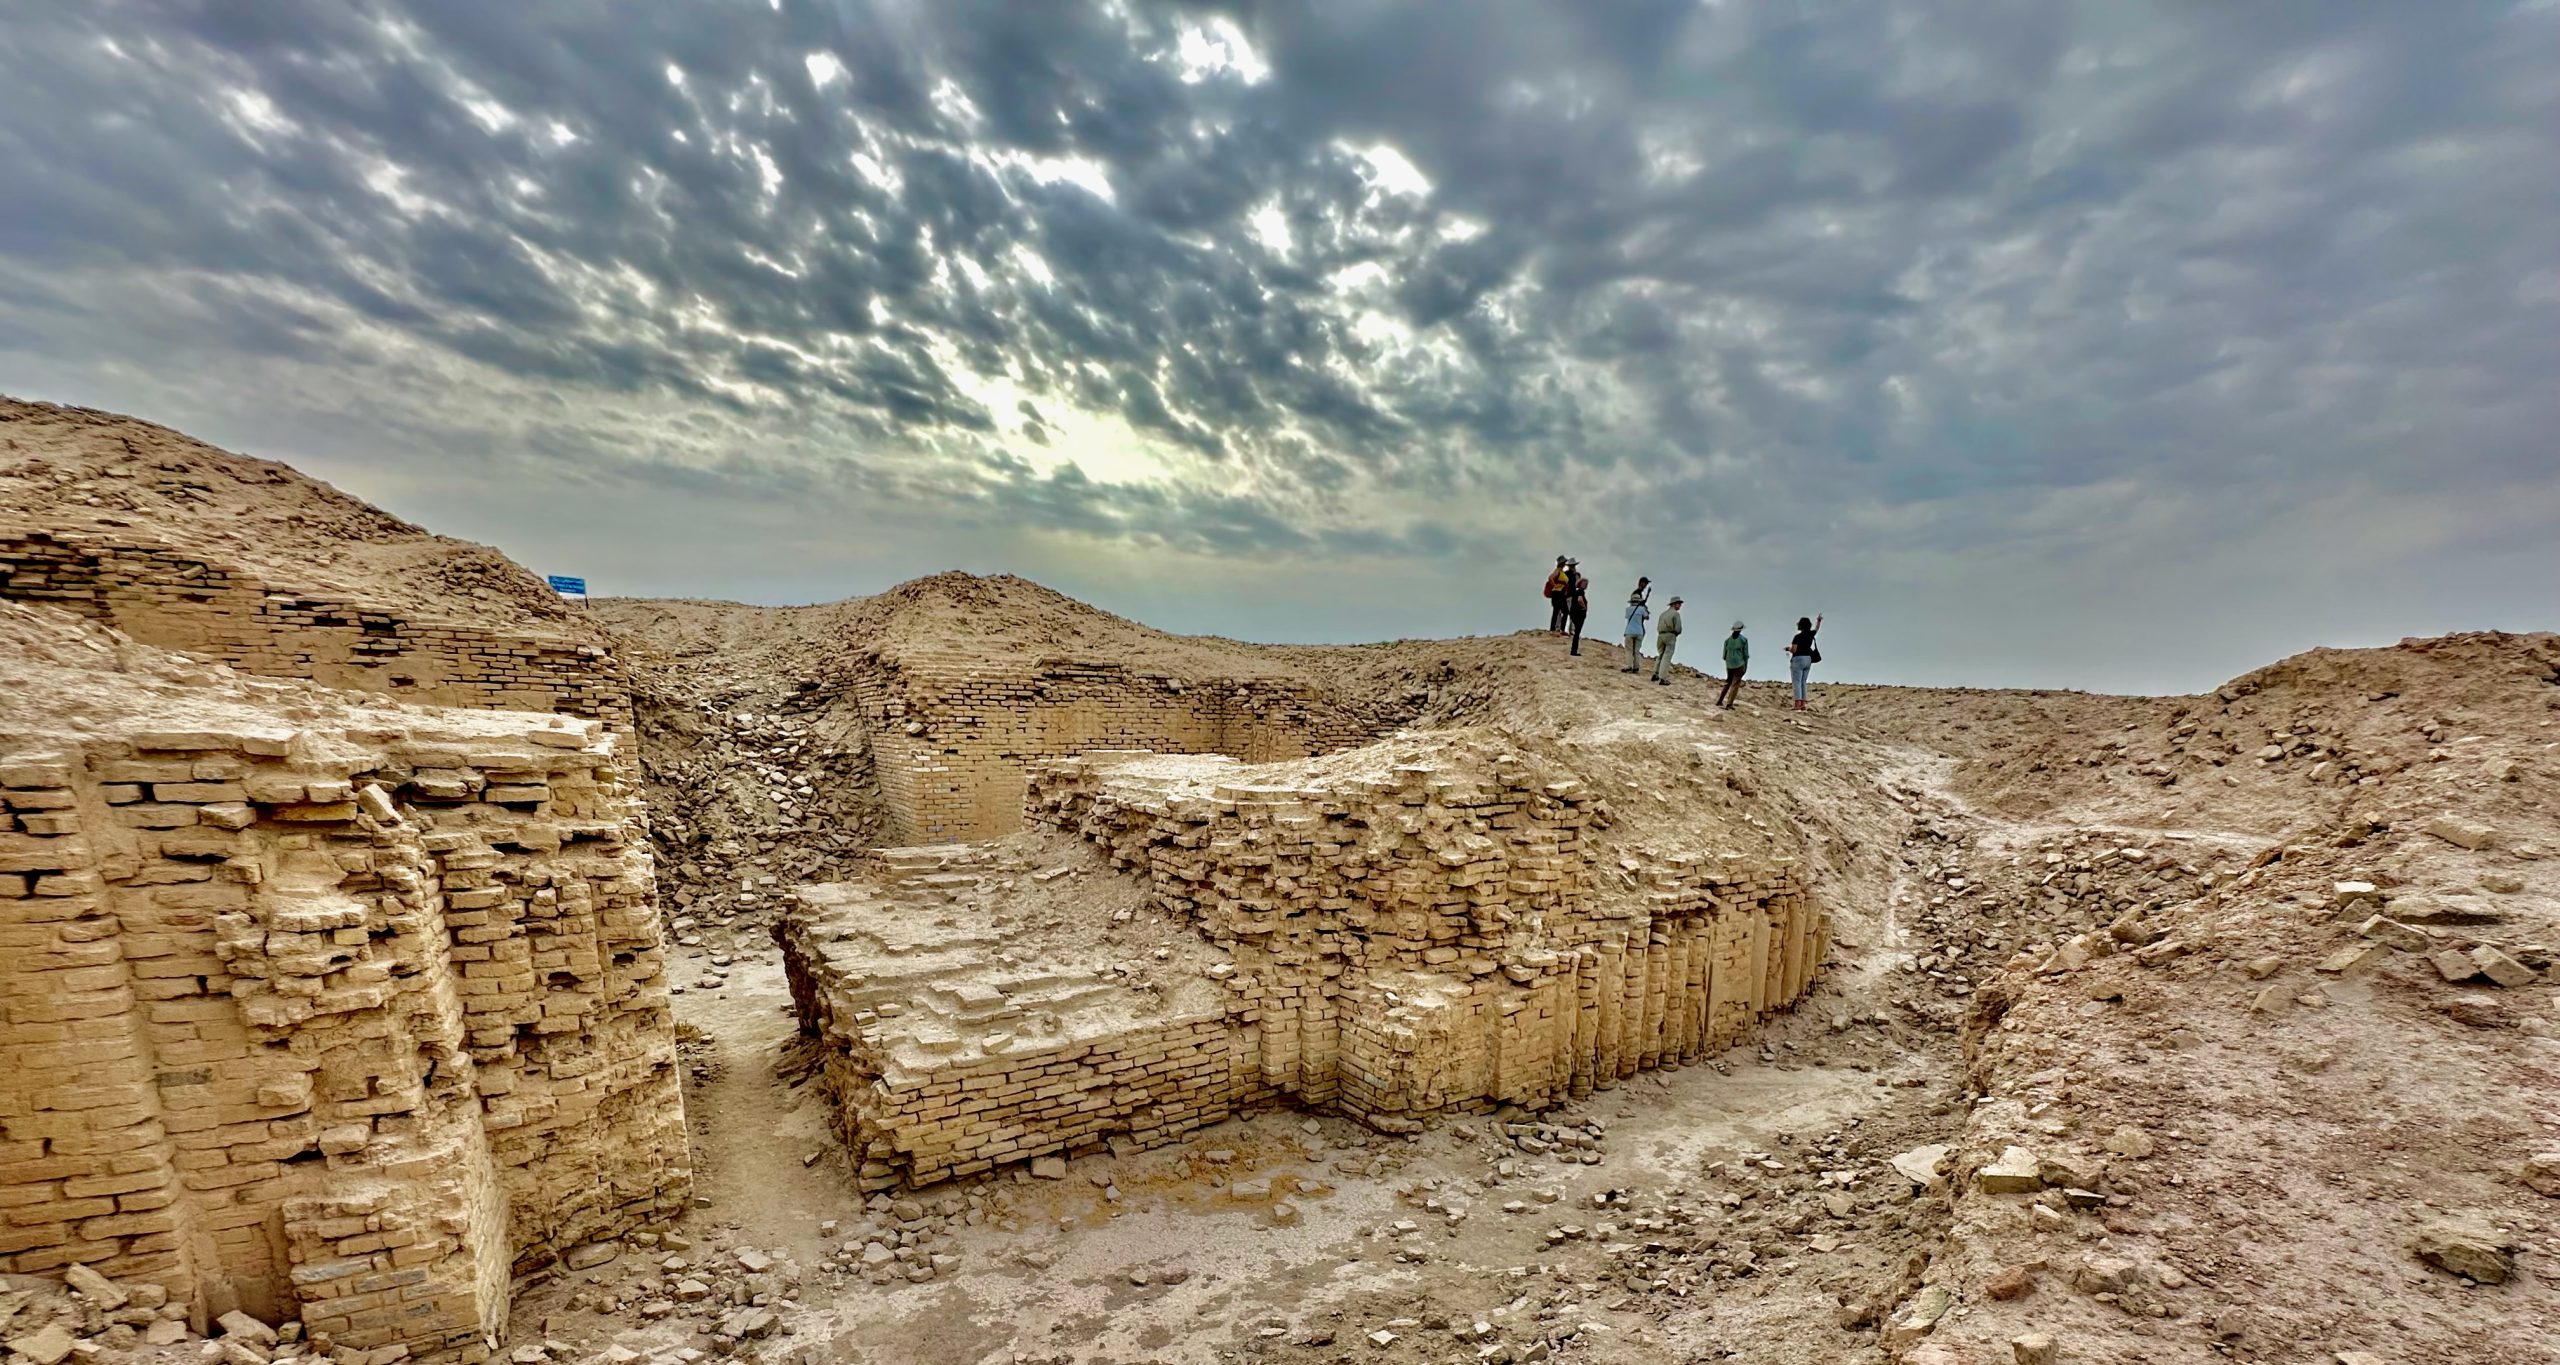 MIR travelers exploring ancient ruins in southern Iraq. Photo credit: Michel Behar